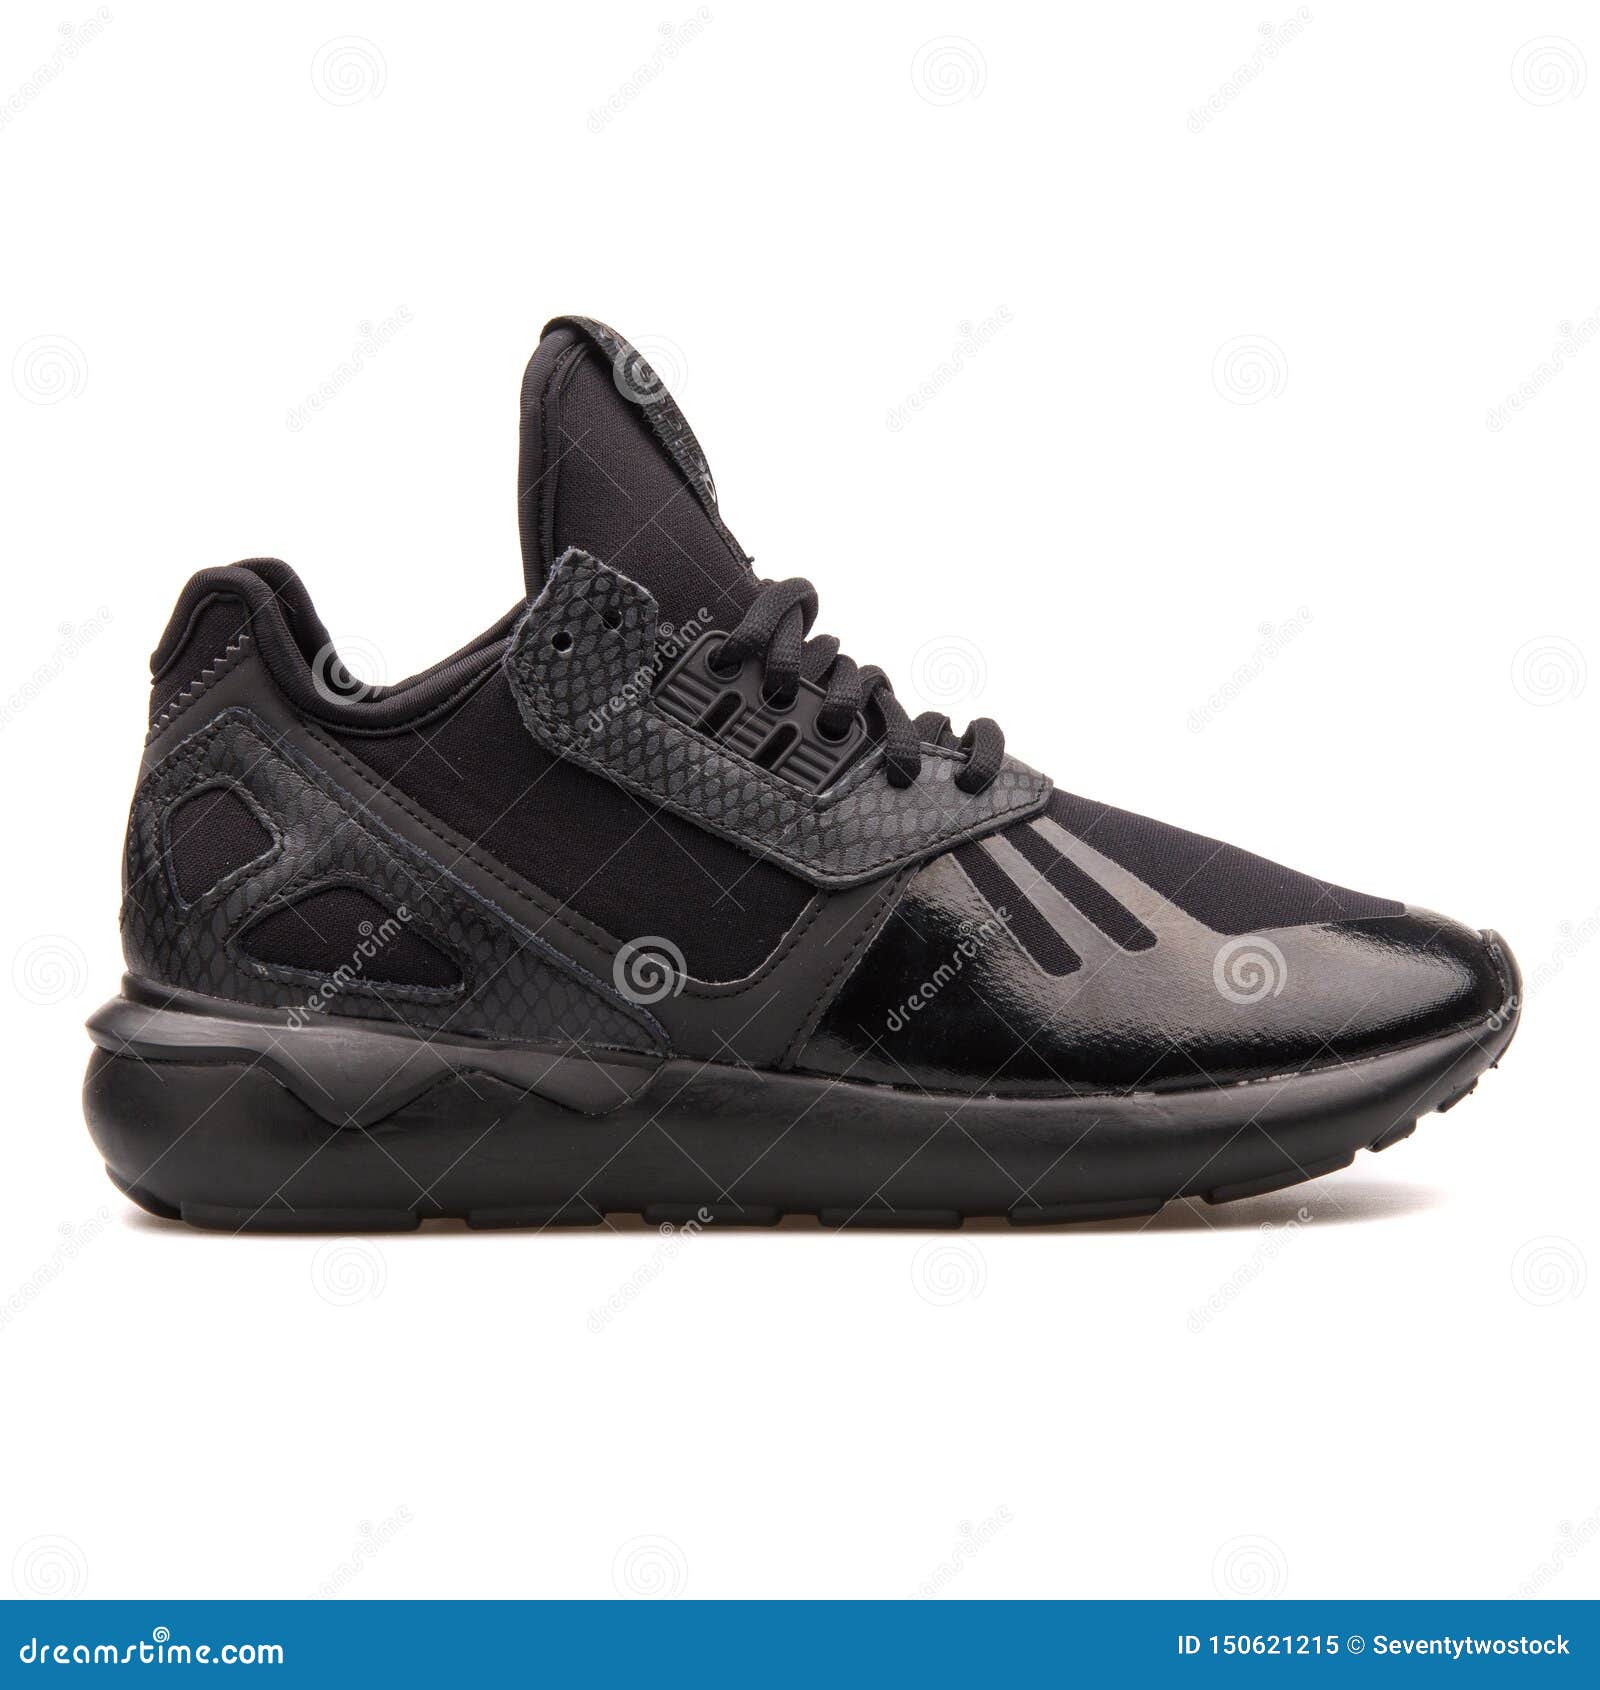 Adidas Runner Black Sneaker Editorial Image - fitness, casual: 150621215